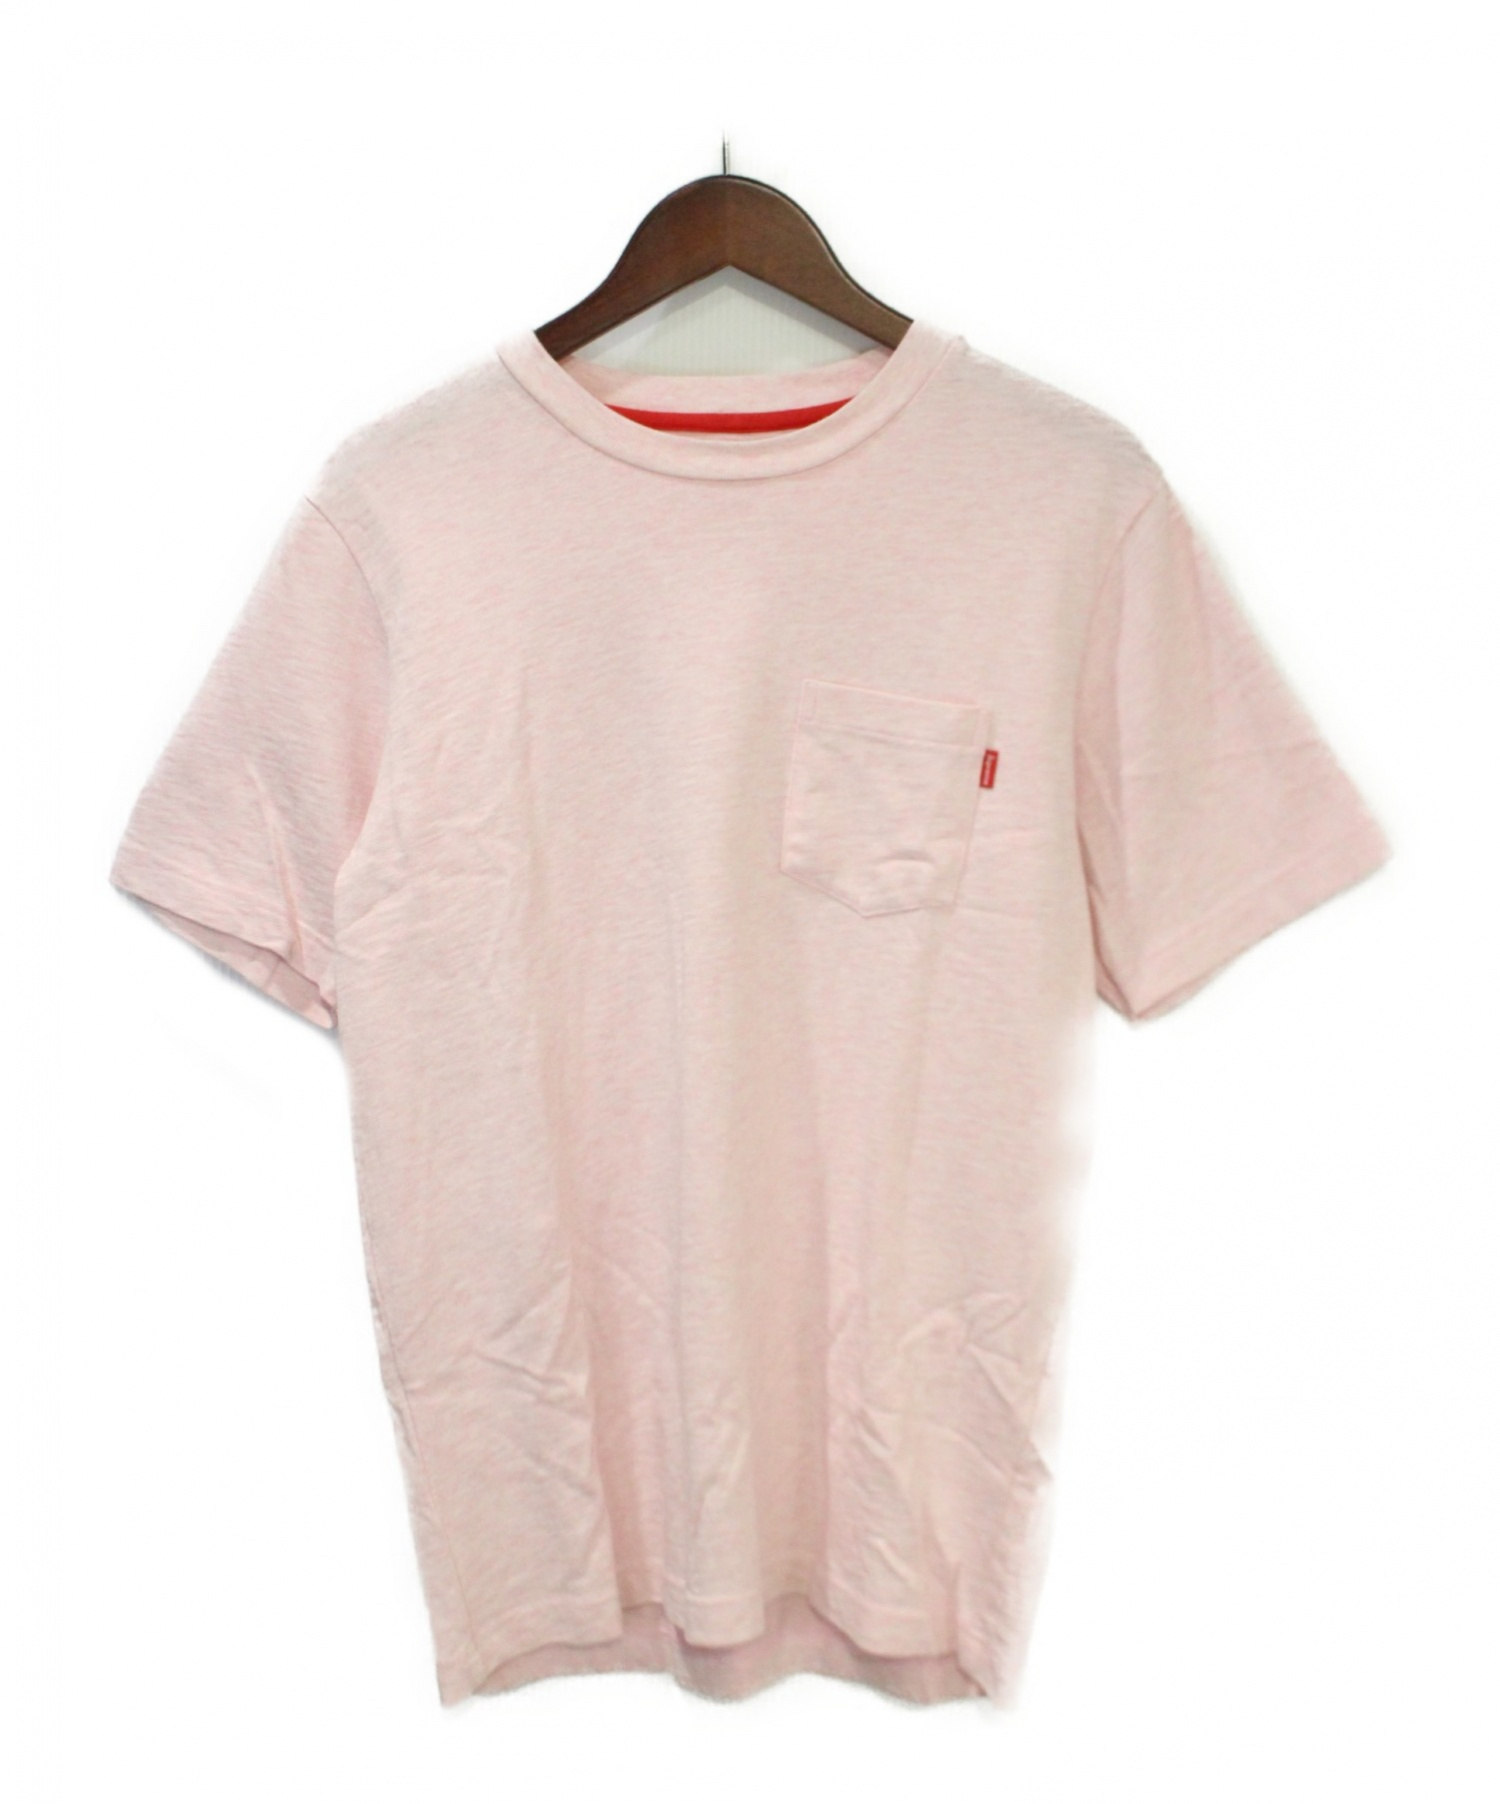 Supreme シュプリーム ポケットtシャツ ピンク サイズ S ブランド古着の通販サイト ブランドコレクト